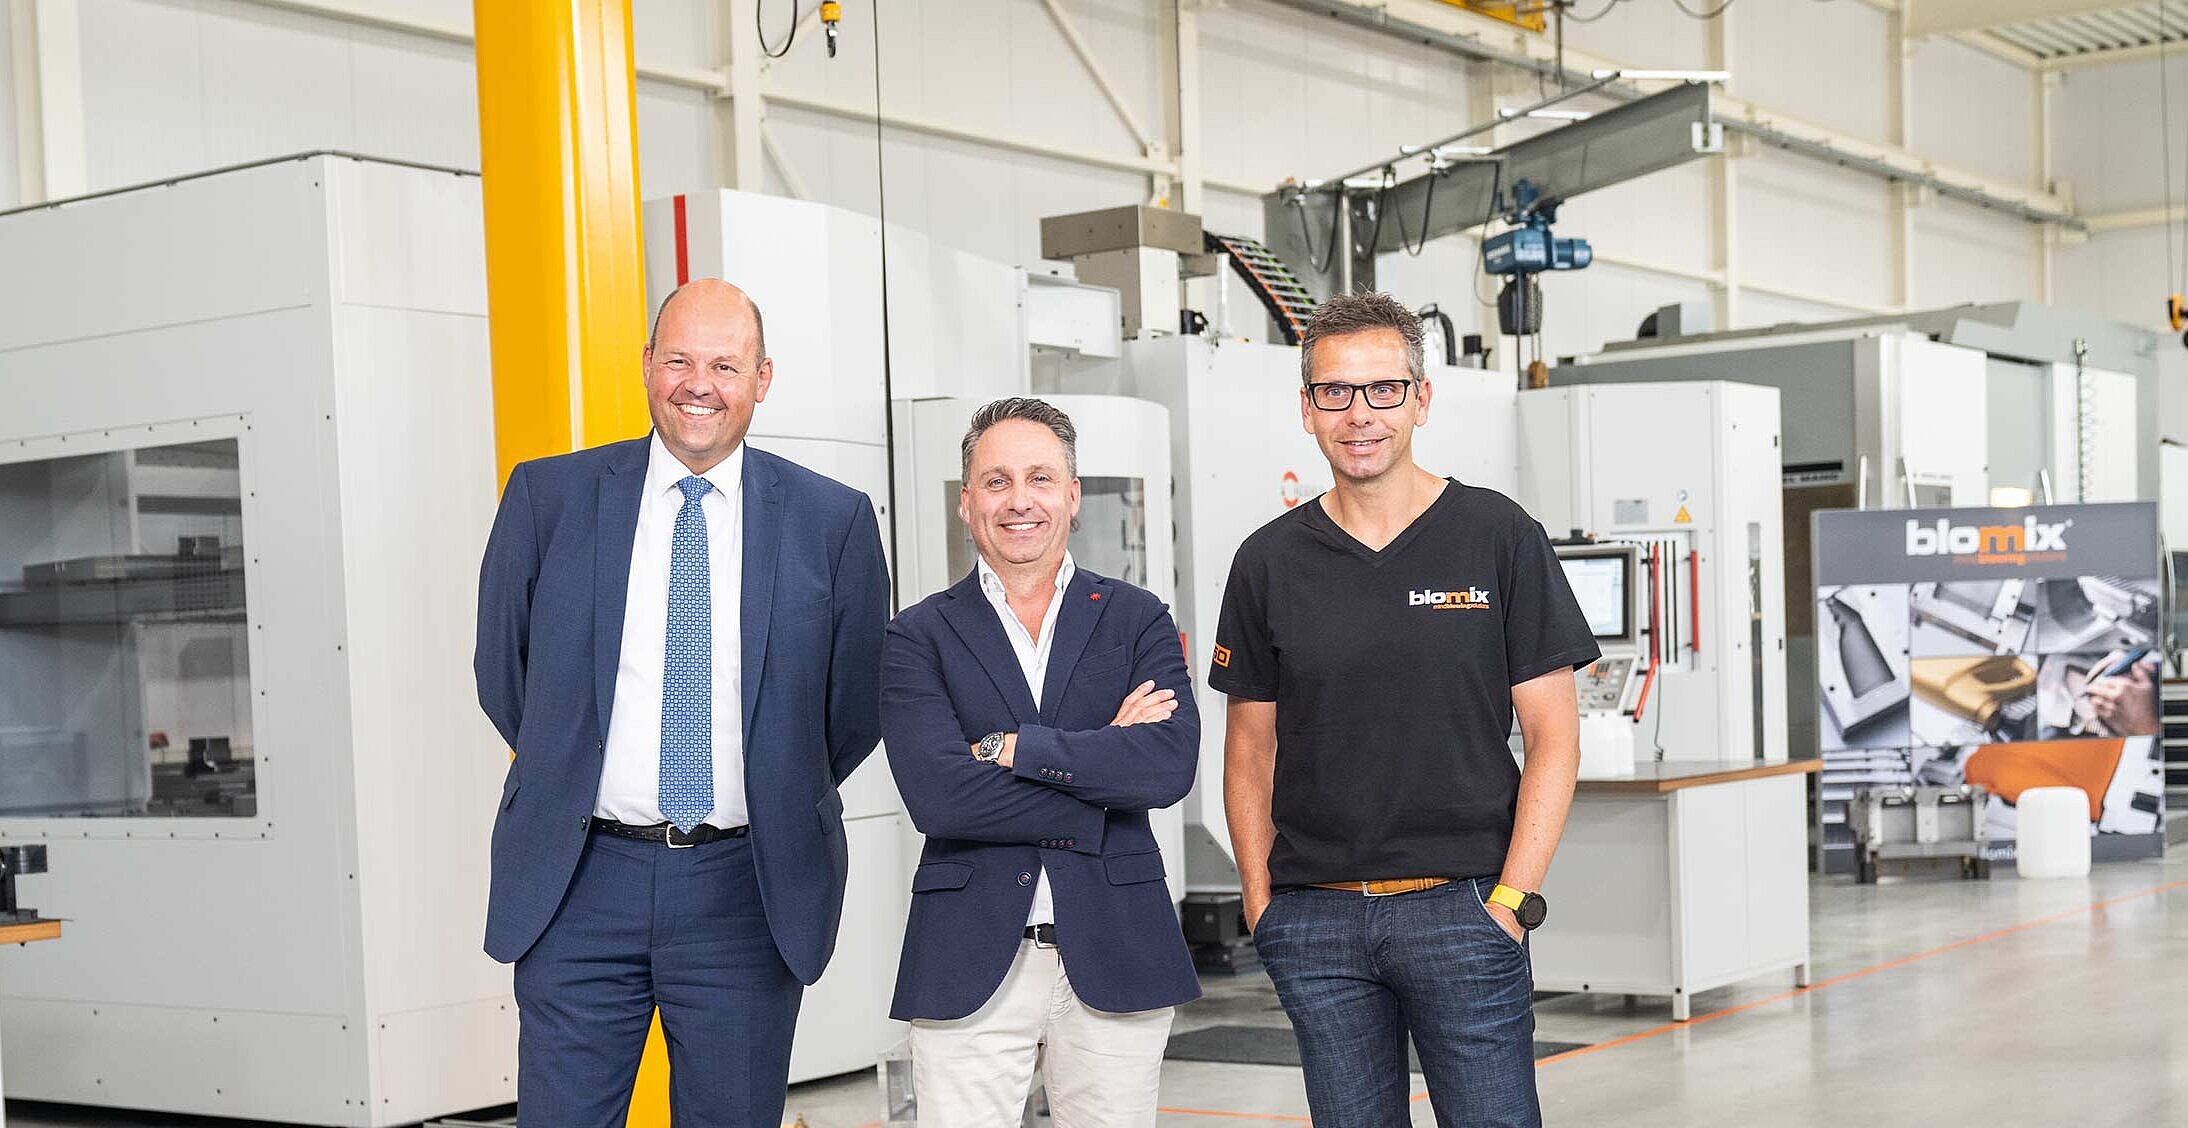 Von links: Geert Cox, Managing Director Hermle Nederland B.V., Luuk Beenders, Geschäftsführer Blomix B.V., und Marco van den Heuvel, Operations Manager bei Blomix B.V.